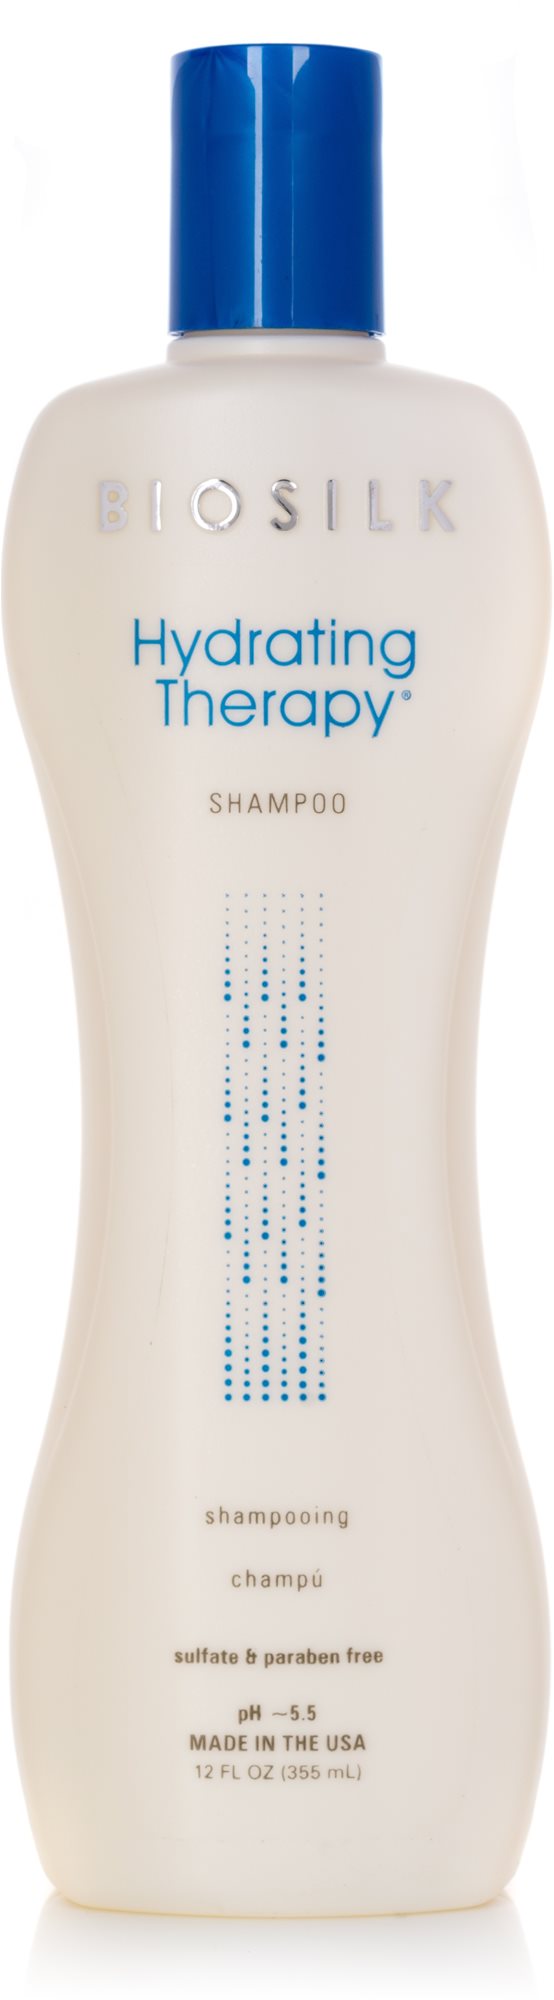 BIOSILK Hydrating Therapy Shampoo 355 ml